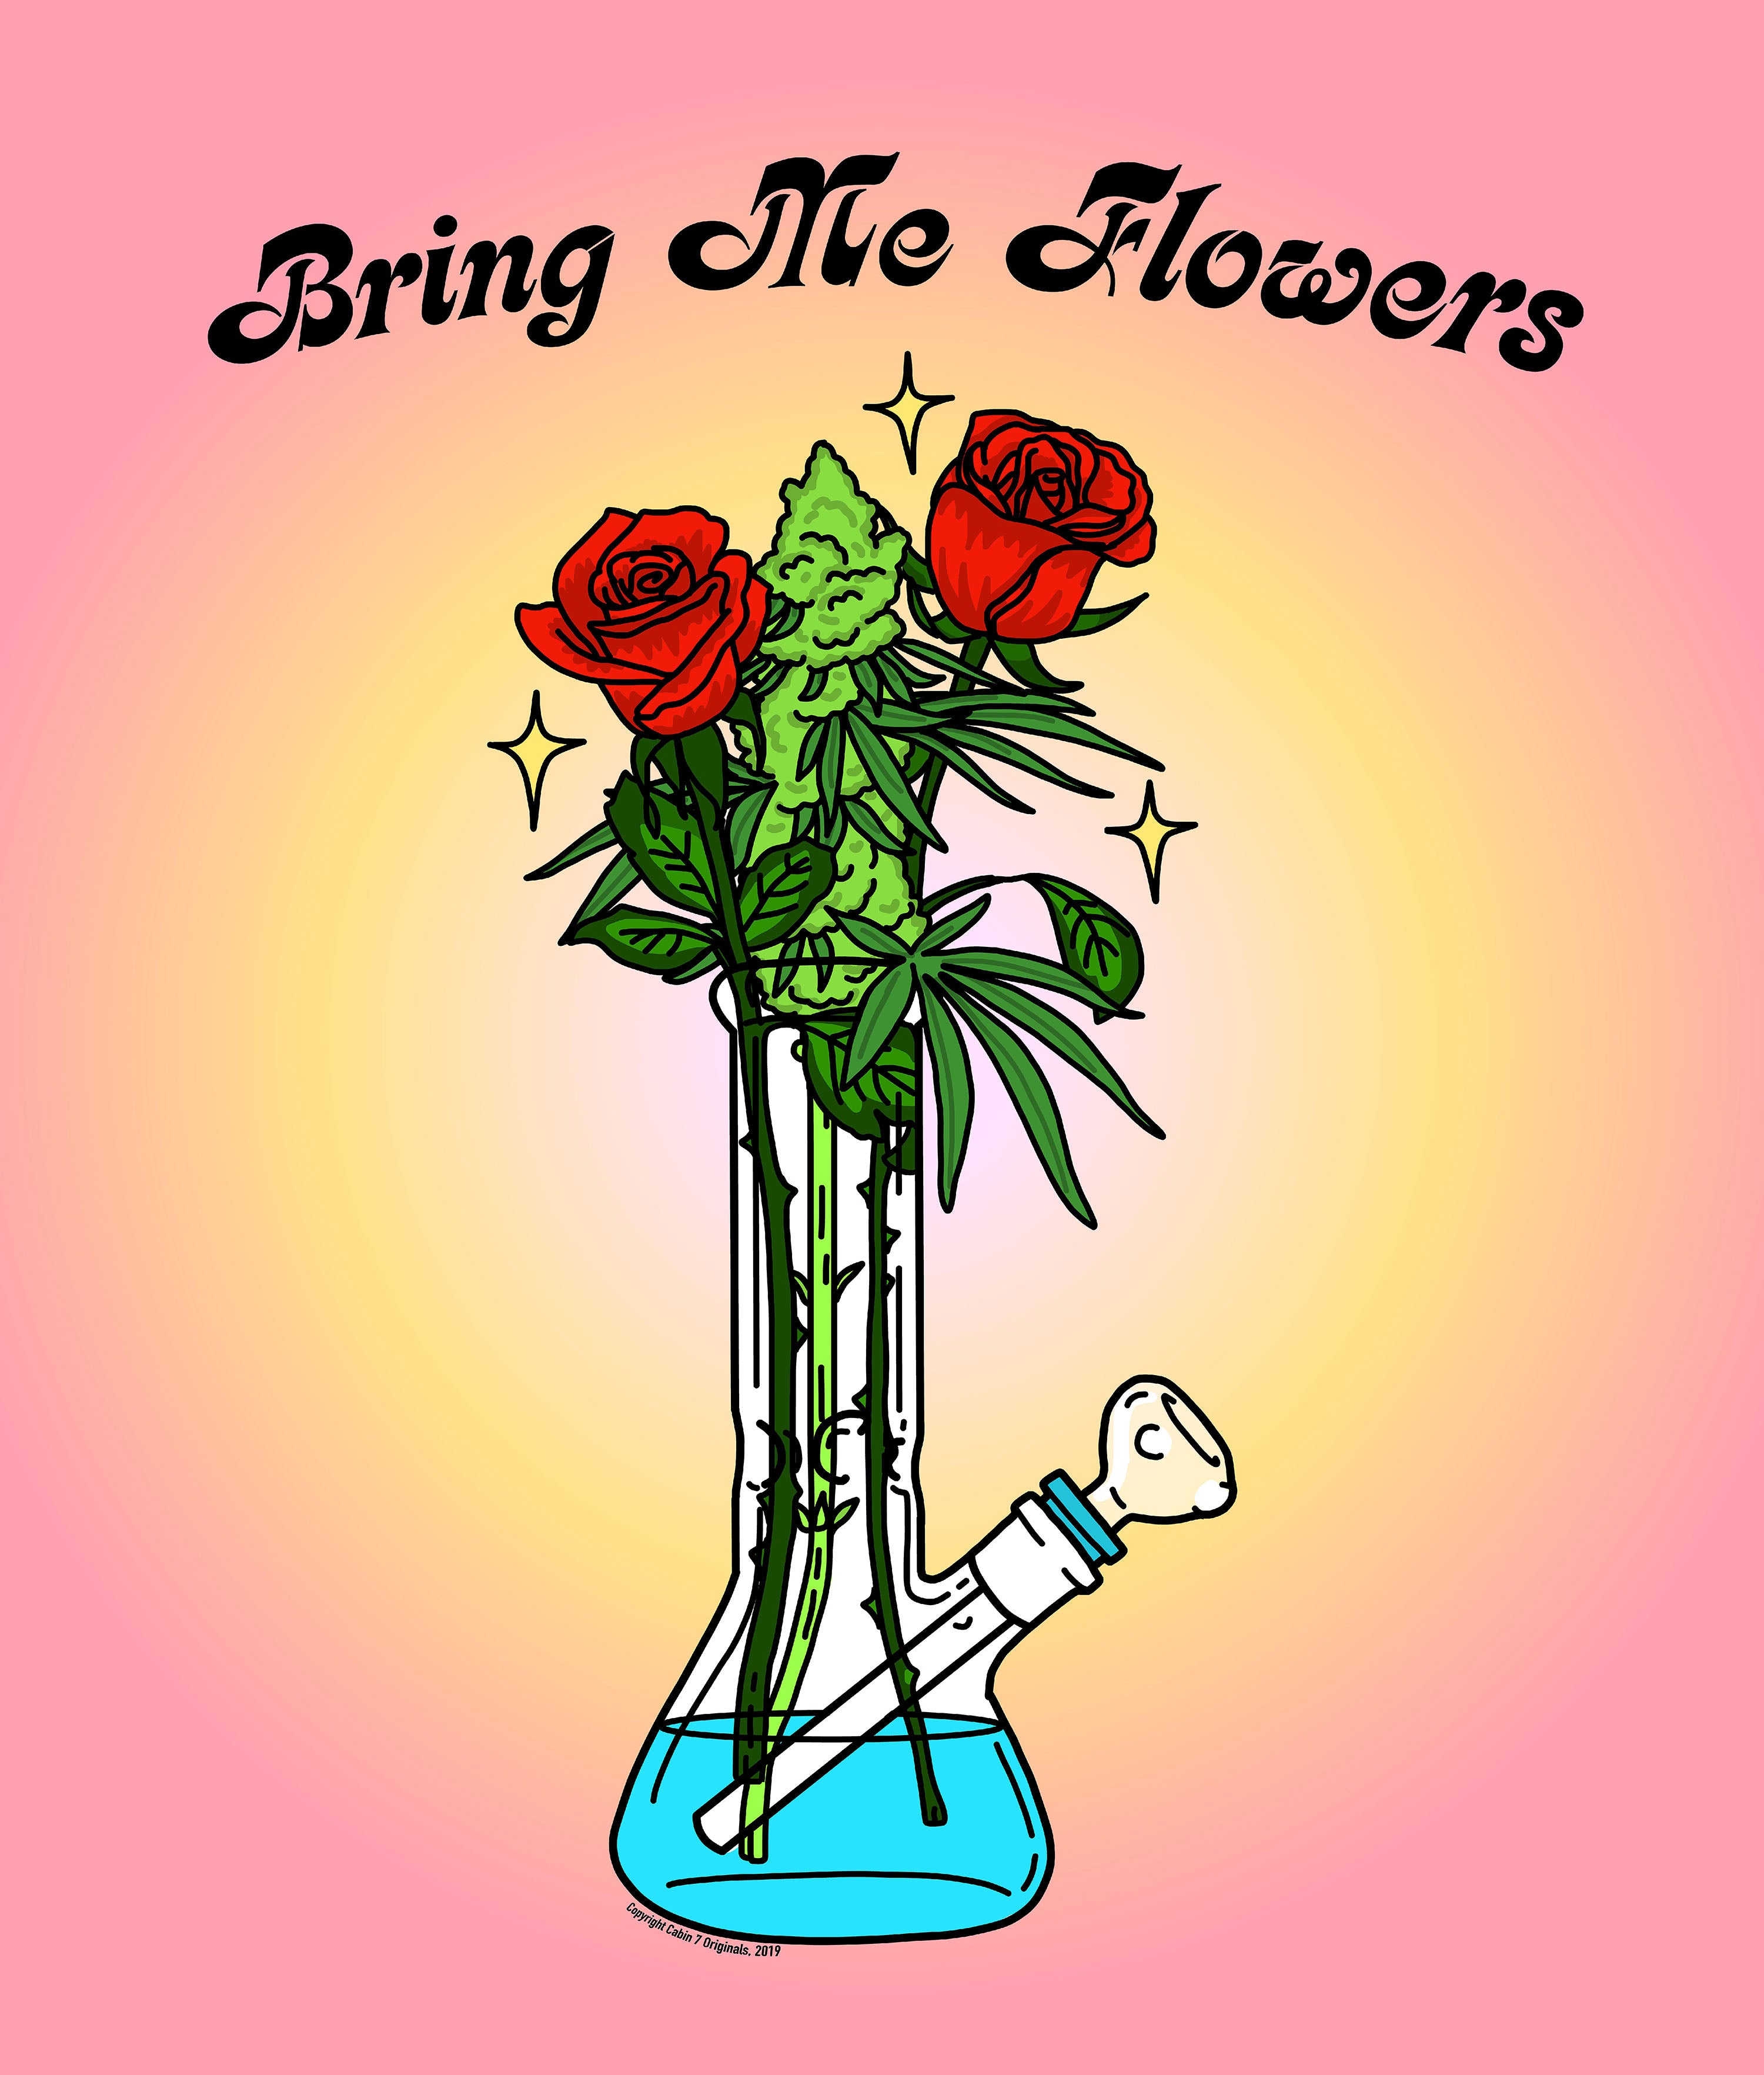 "Bring Me Flowers" Poster Print